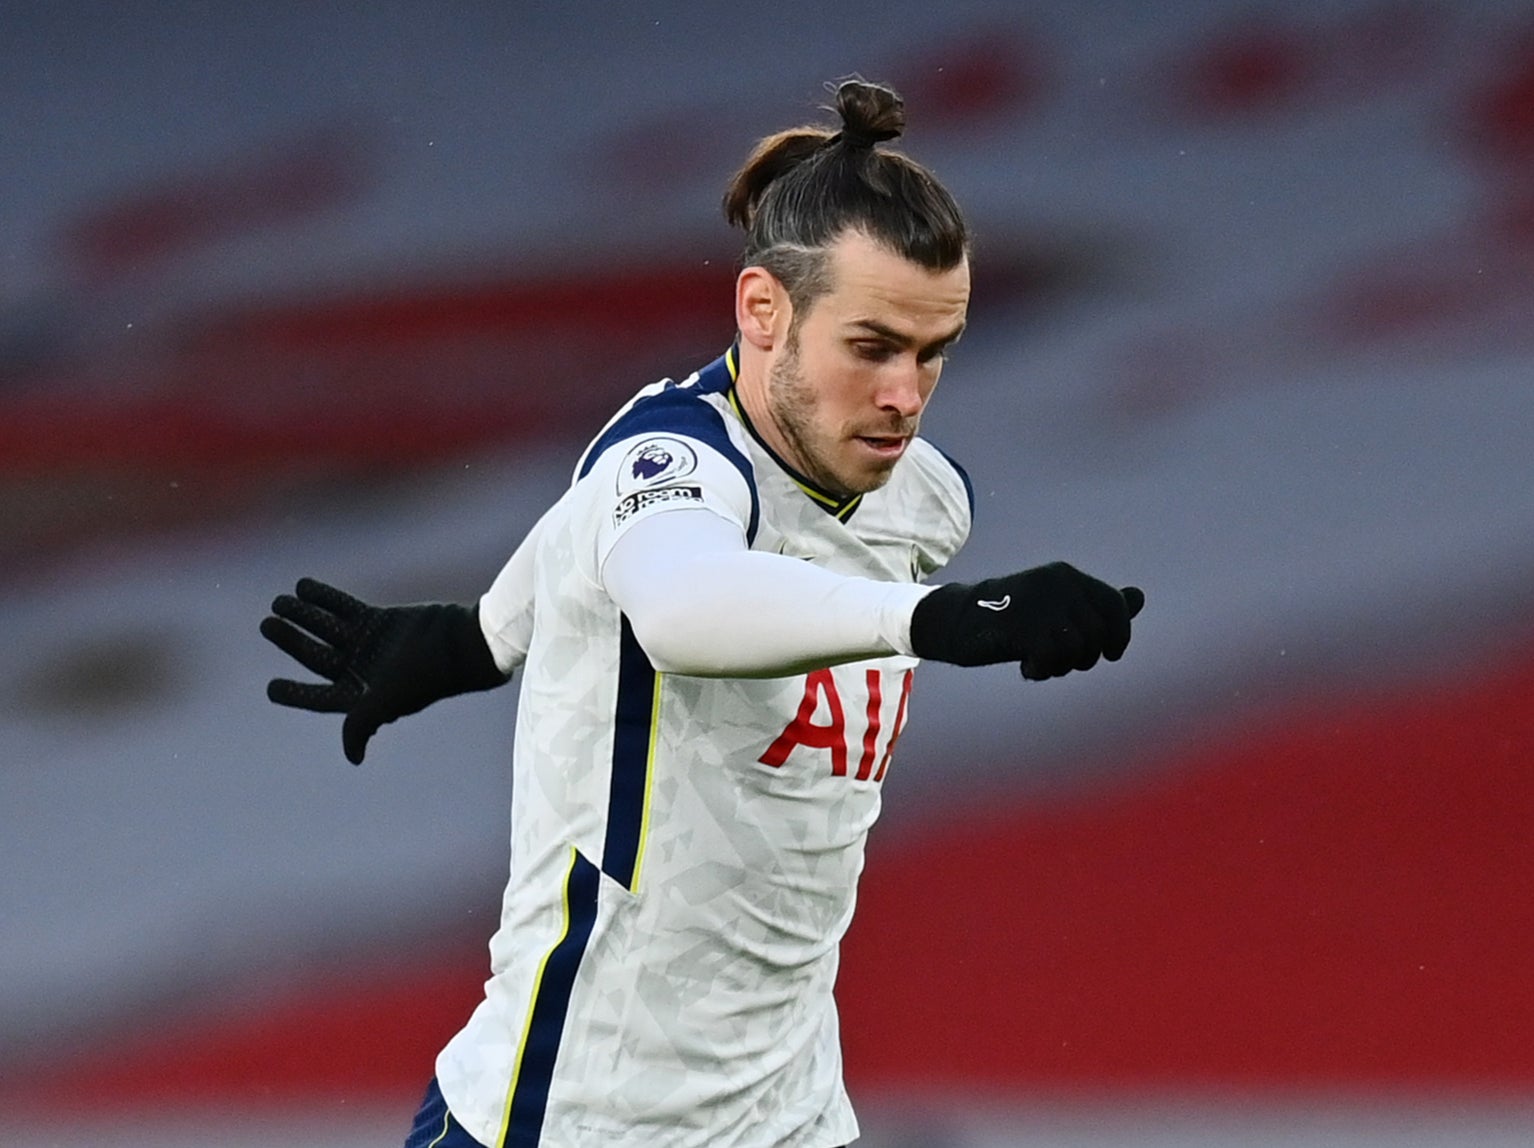 Gareth Bale in action for Tottenham this season